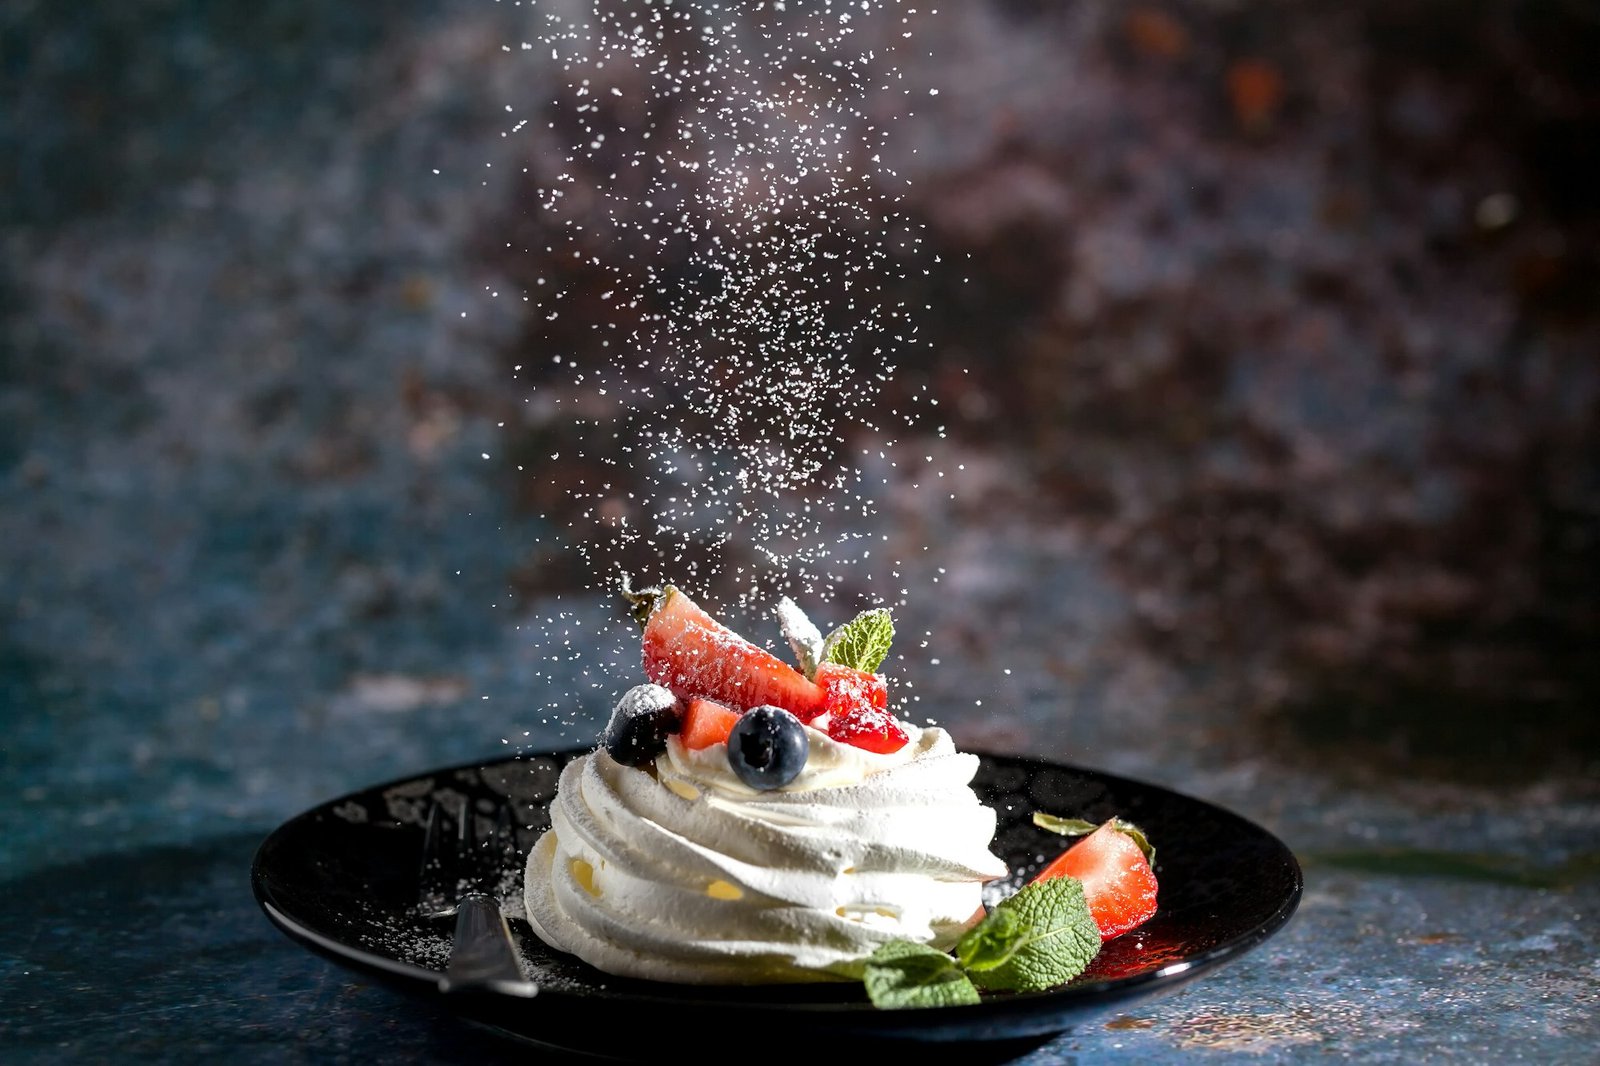 Powdered sugar decorates Pavlova's dessert